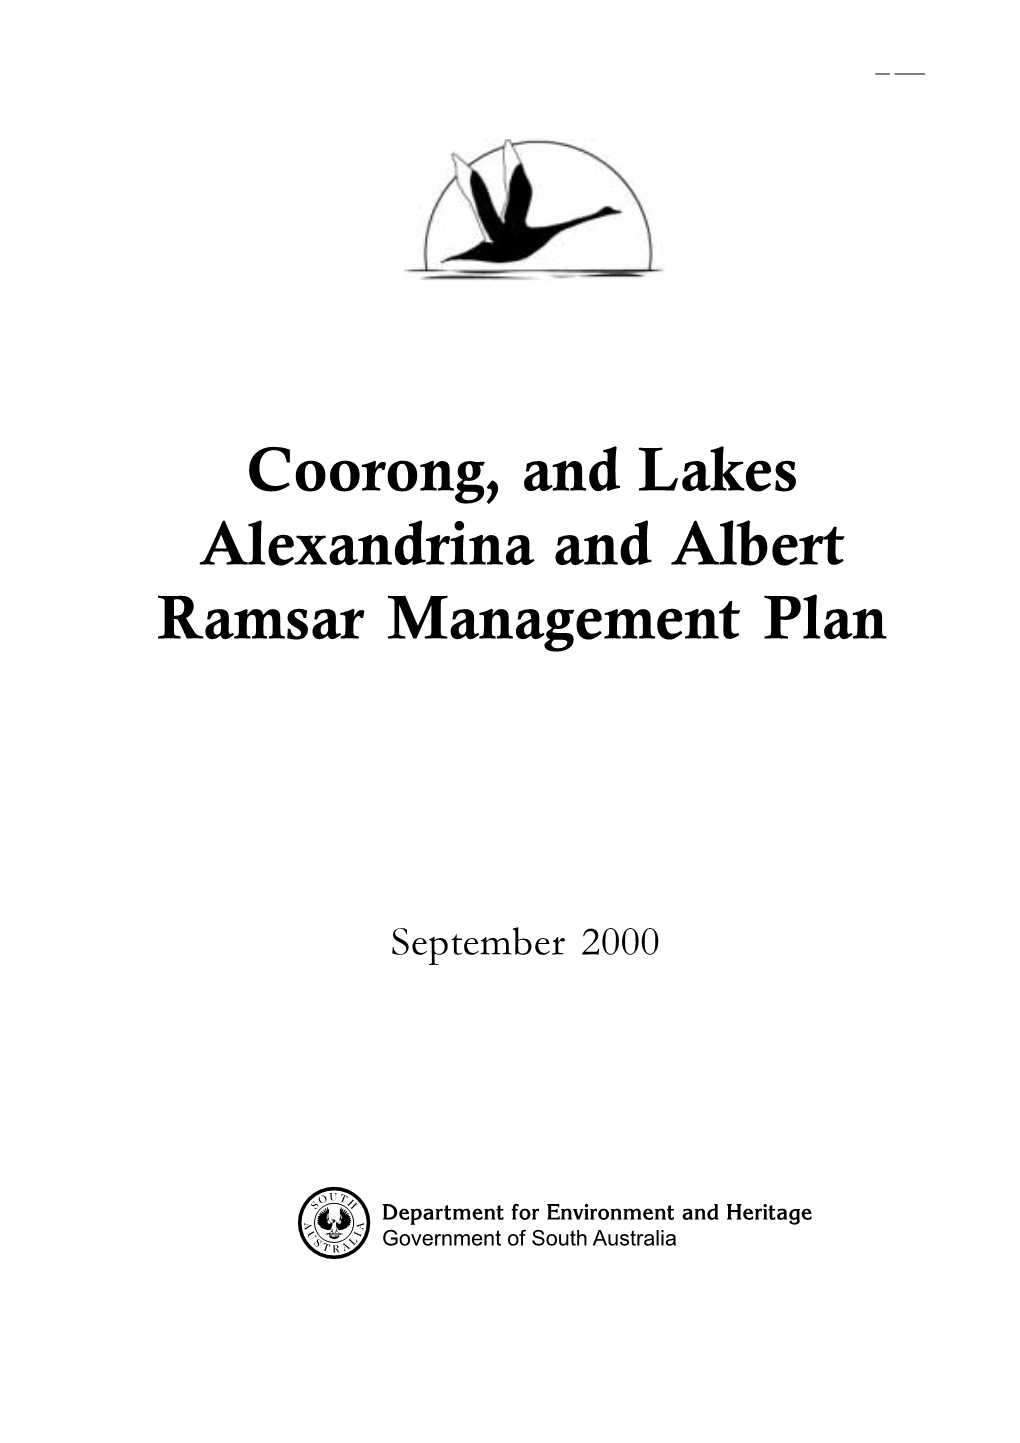 Coorong, and Lakes Alexandrina and Albert and Ramsar Management Plan